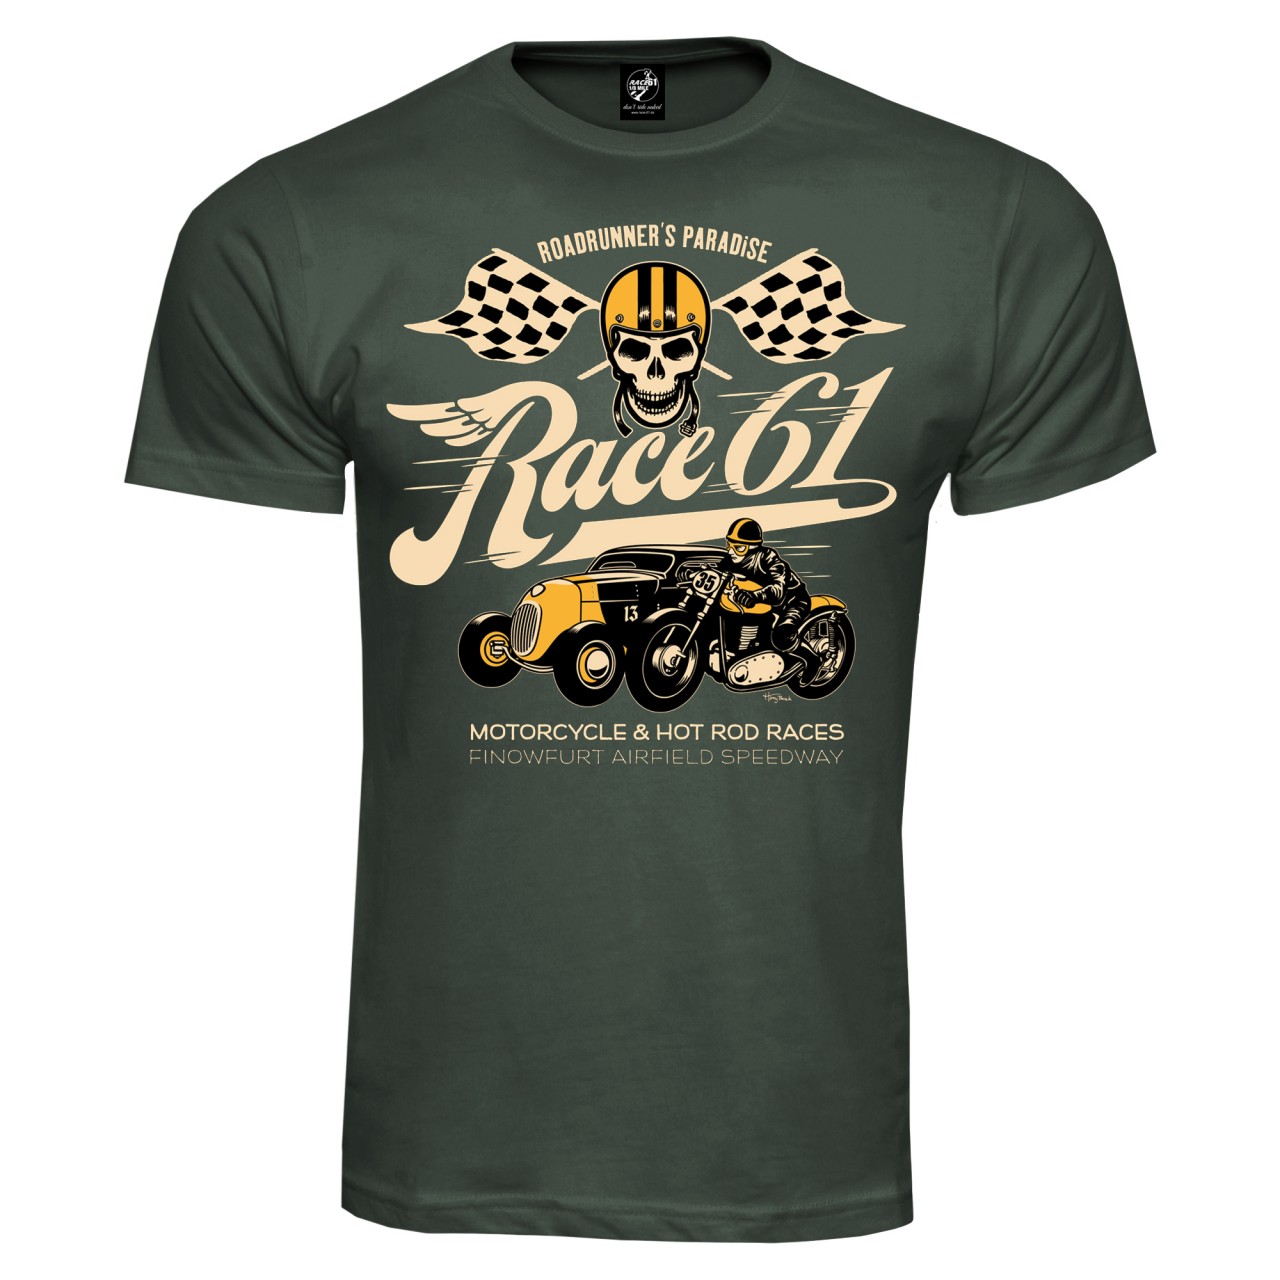 Race 61 T-Shirt Motorcycle & Hot Rod Race Khaki